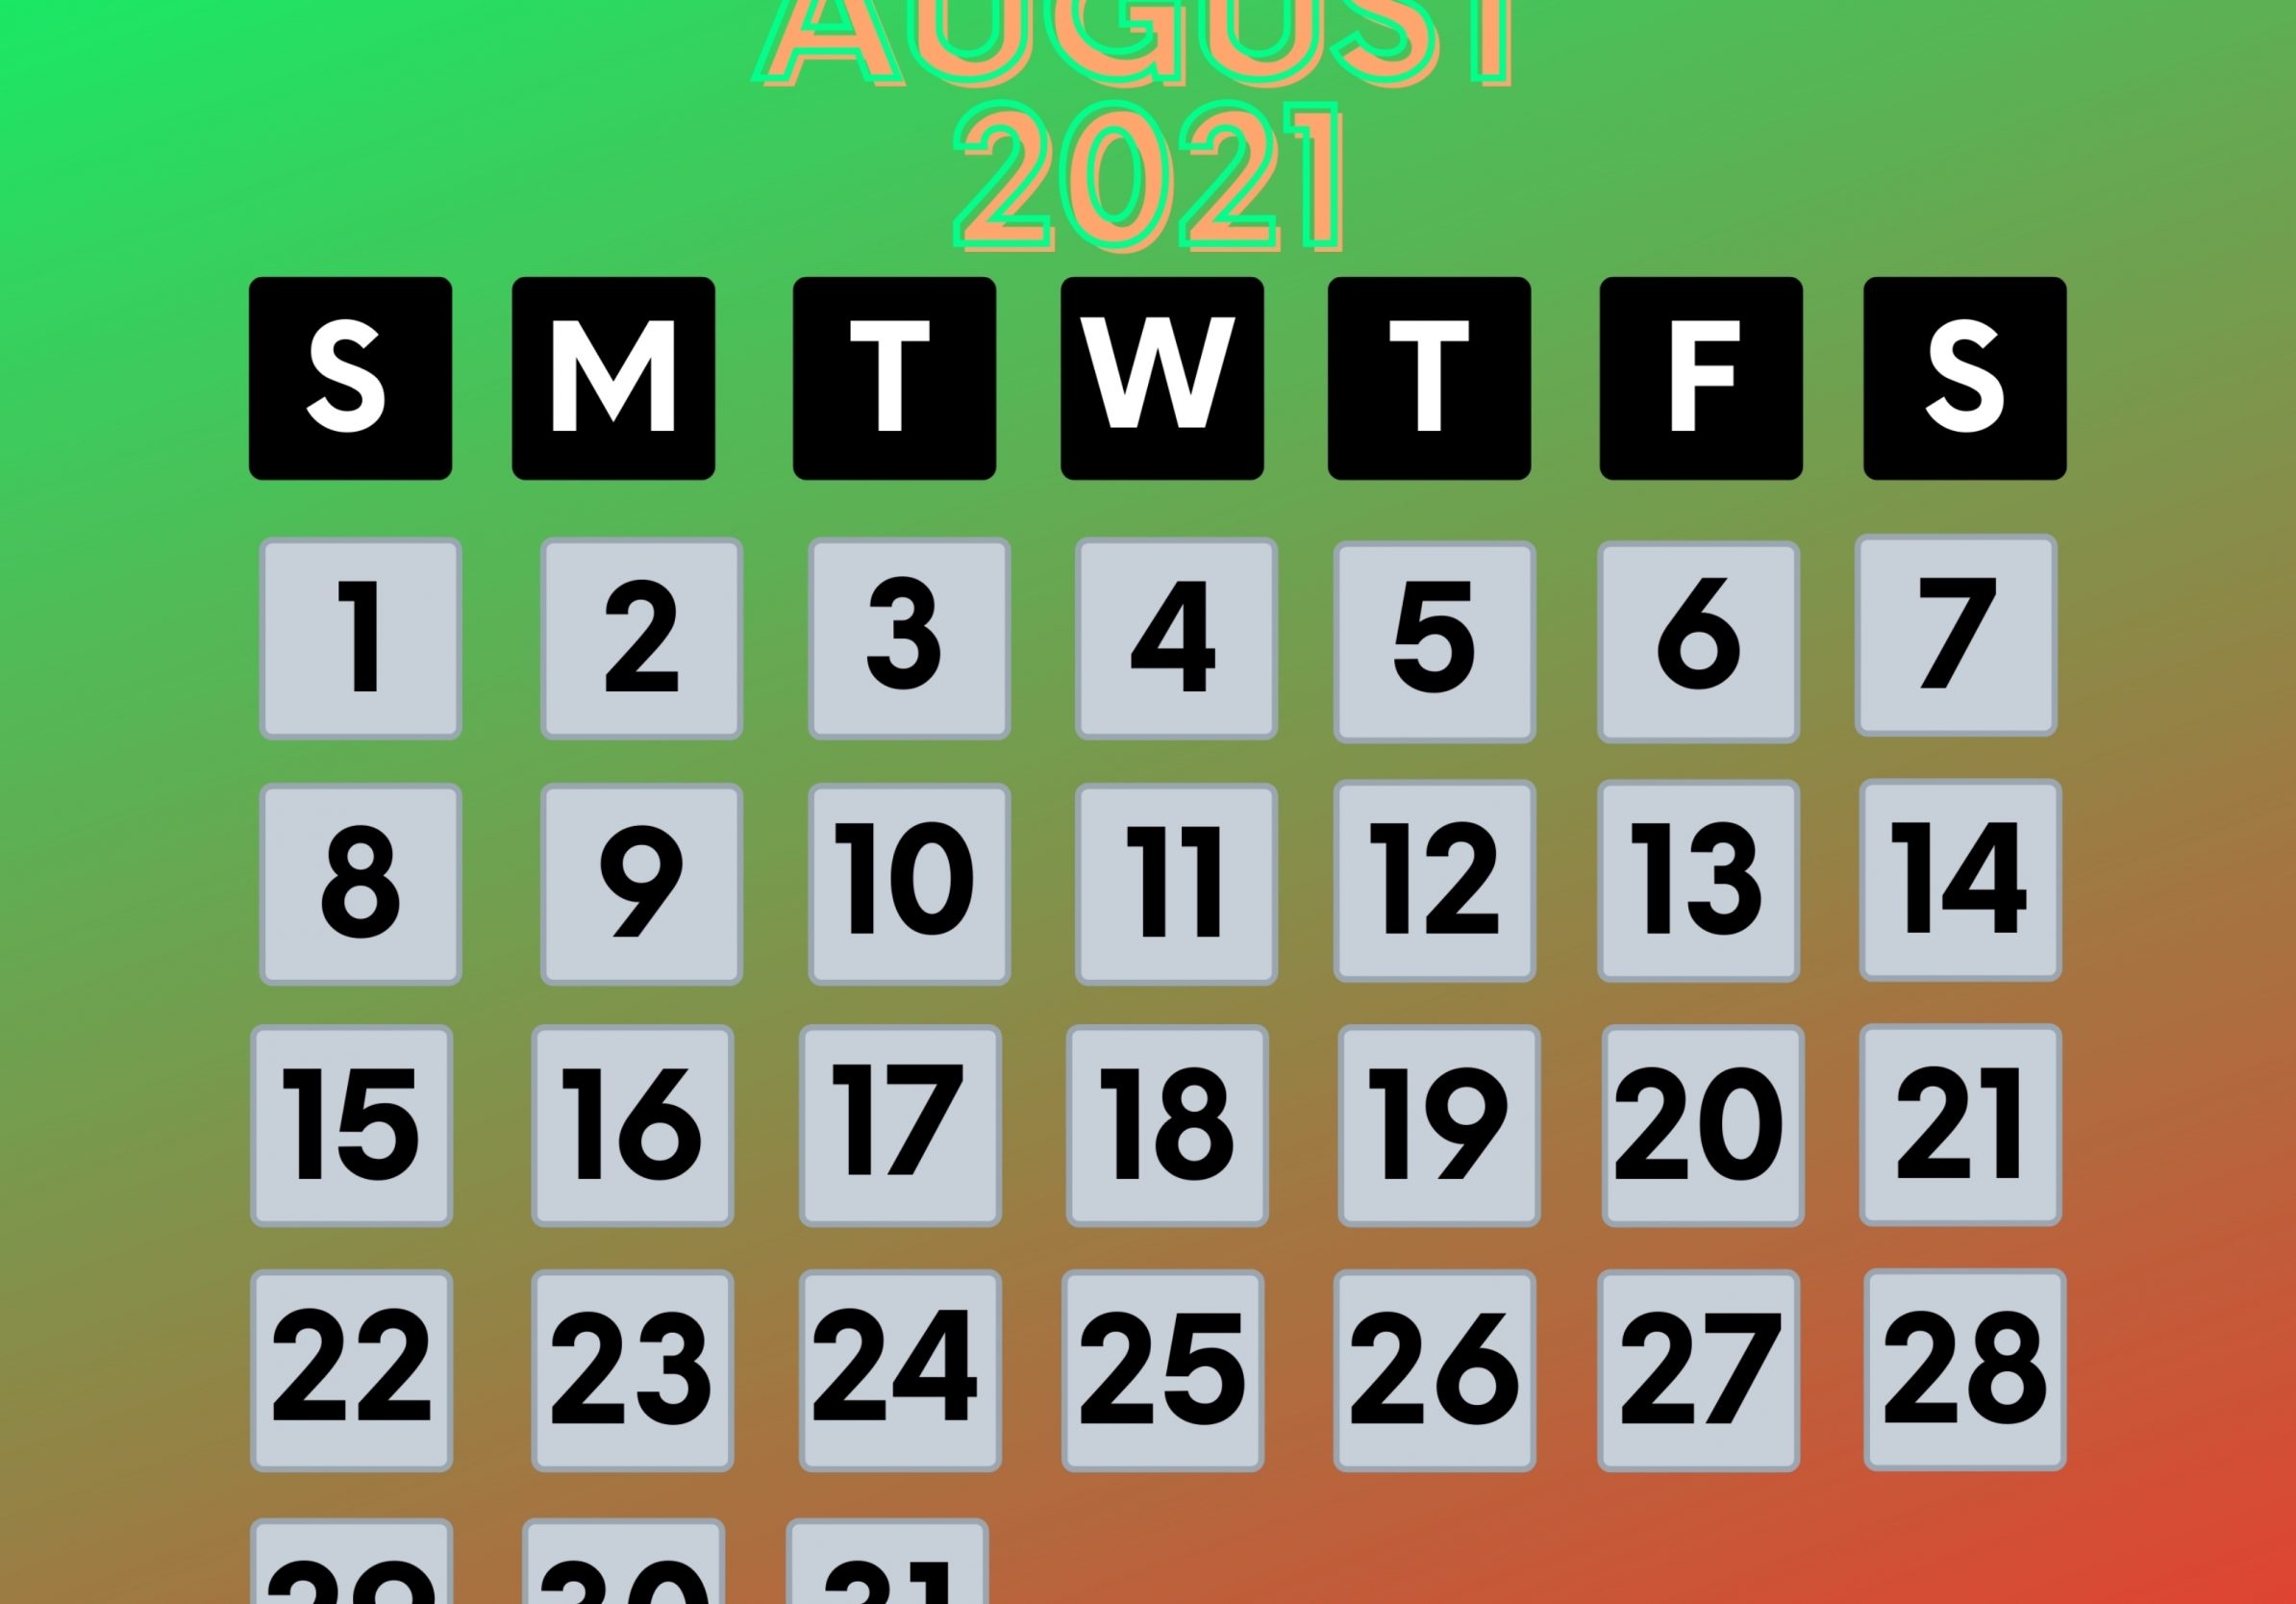 2388x1668 iPad Pro wallpapers August 2021 Calendar iPad Wallpaper 2388x1668 pixels resolution